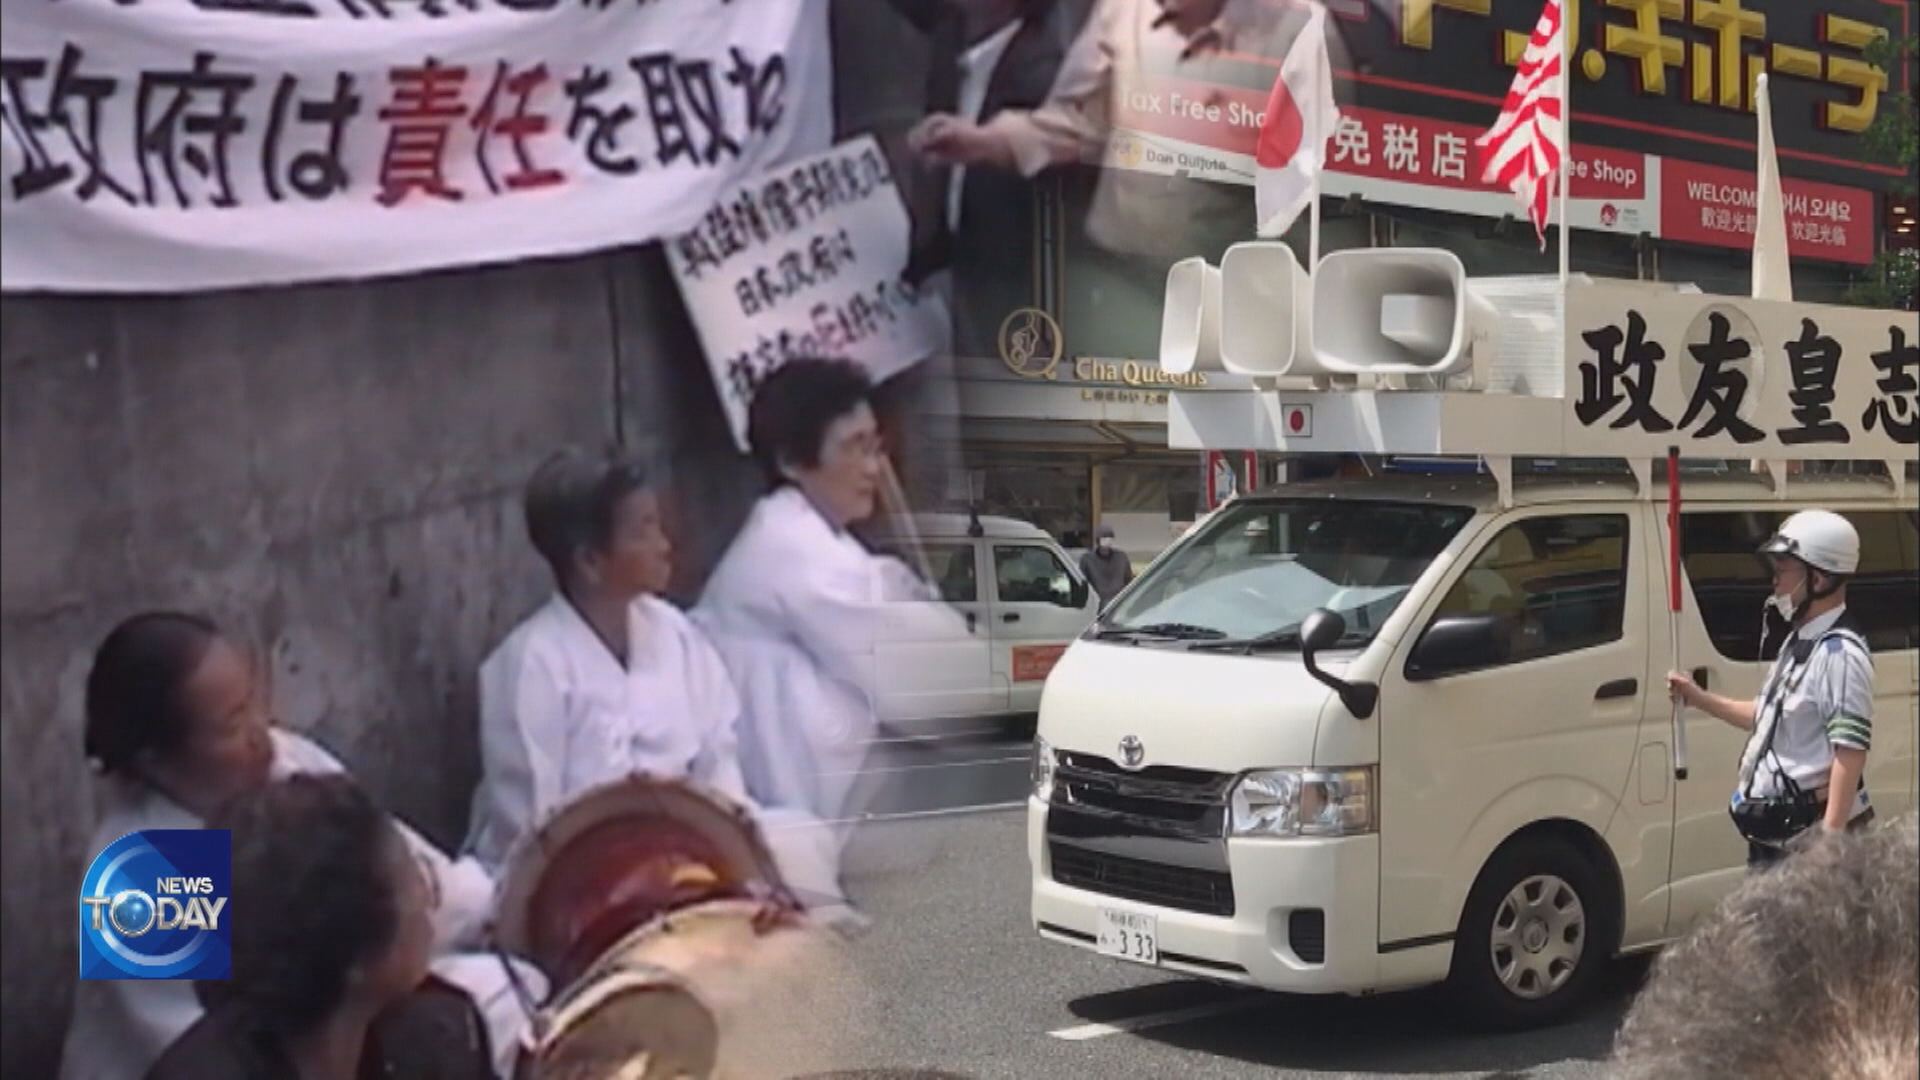 JAPANESE PROTESTS AGAINST KOREAN FILM